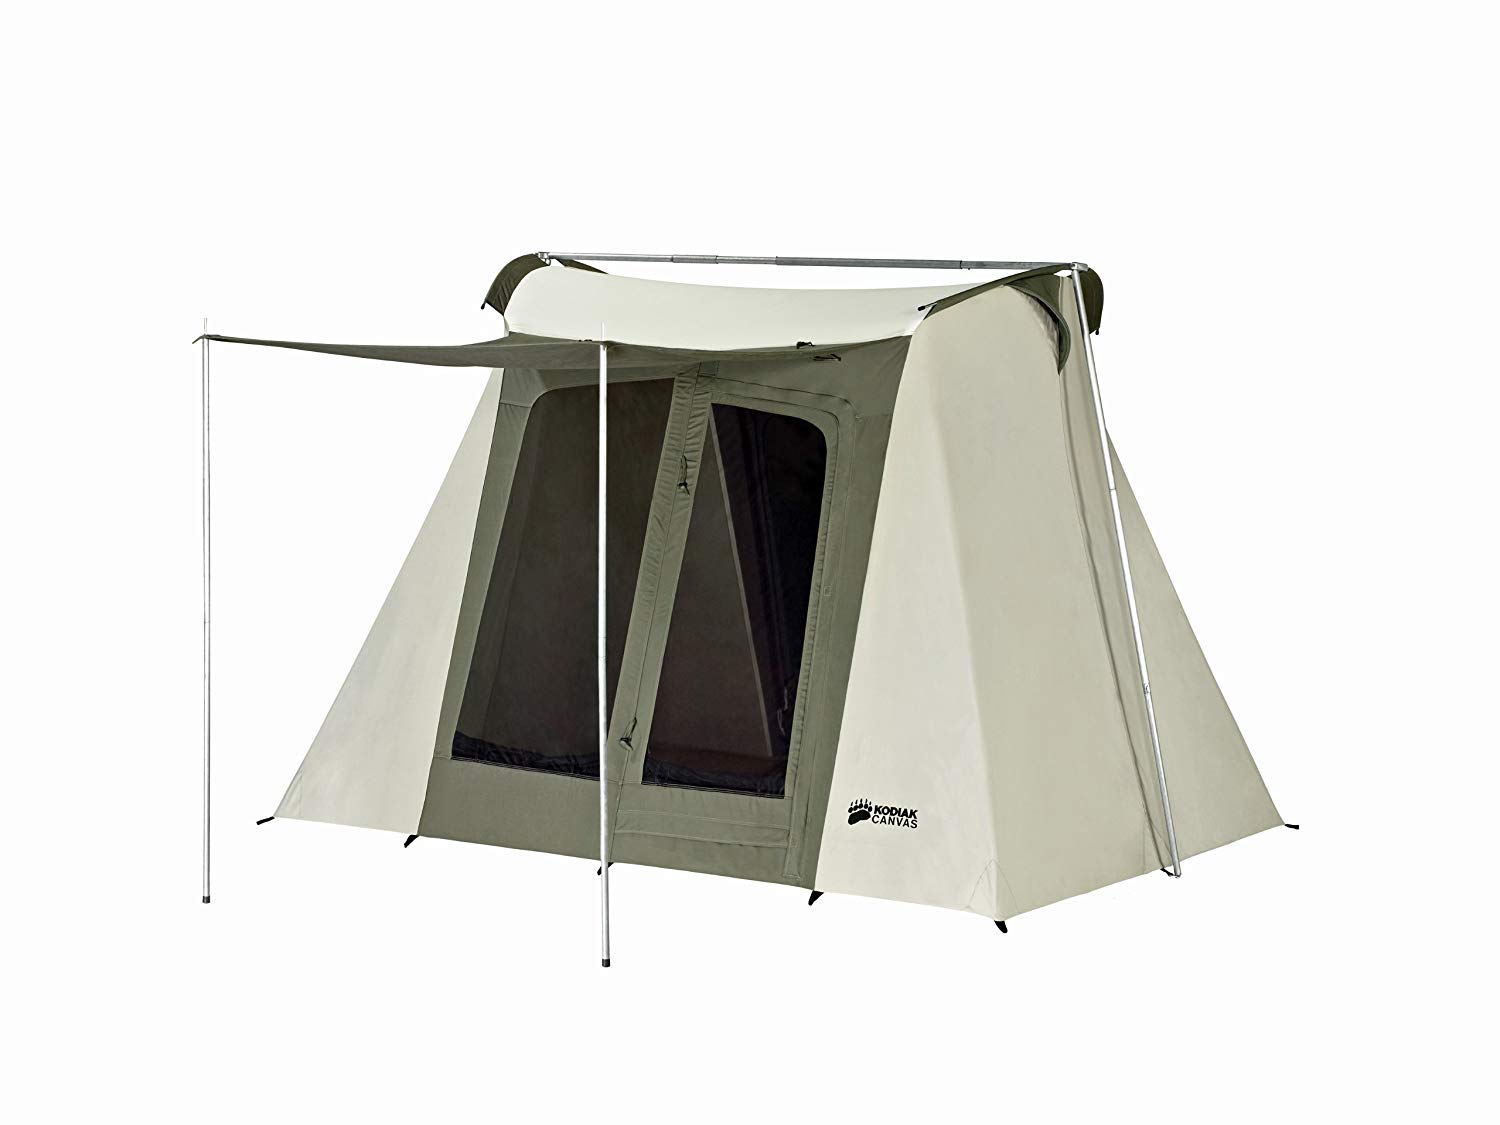 Kodiak Canvas Flex-Bow 4-Person Canvas Tent